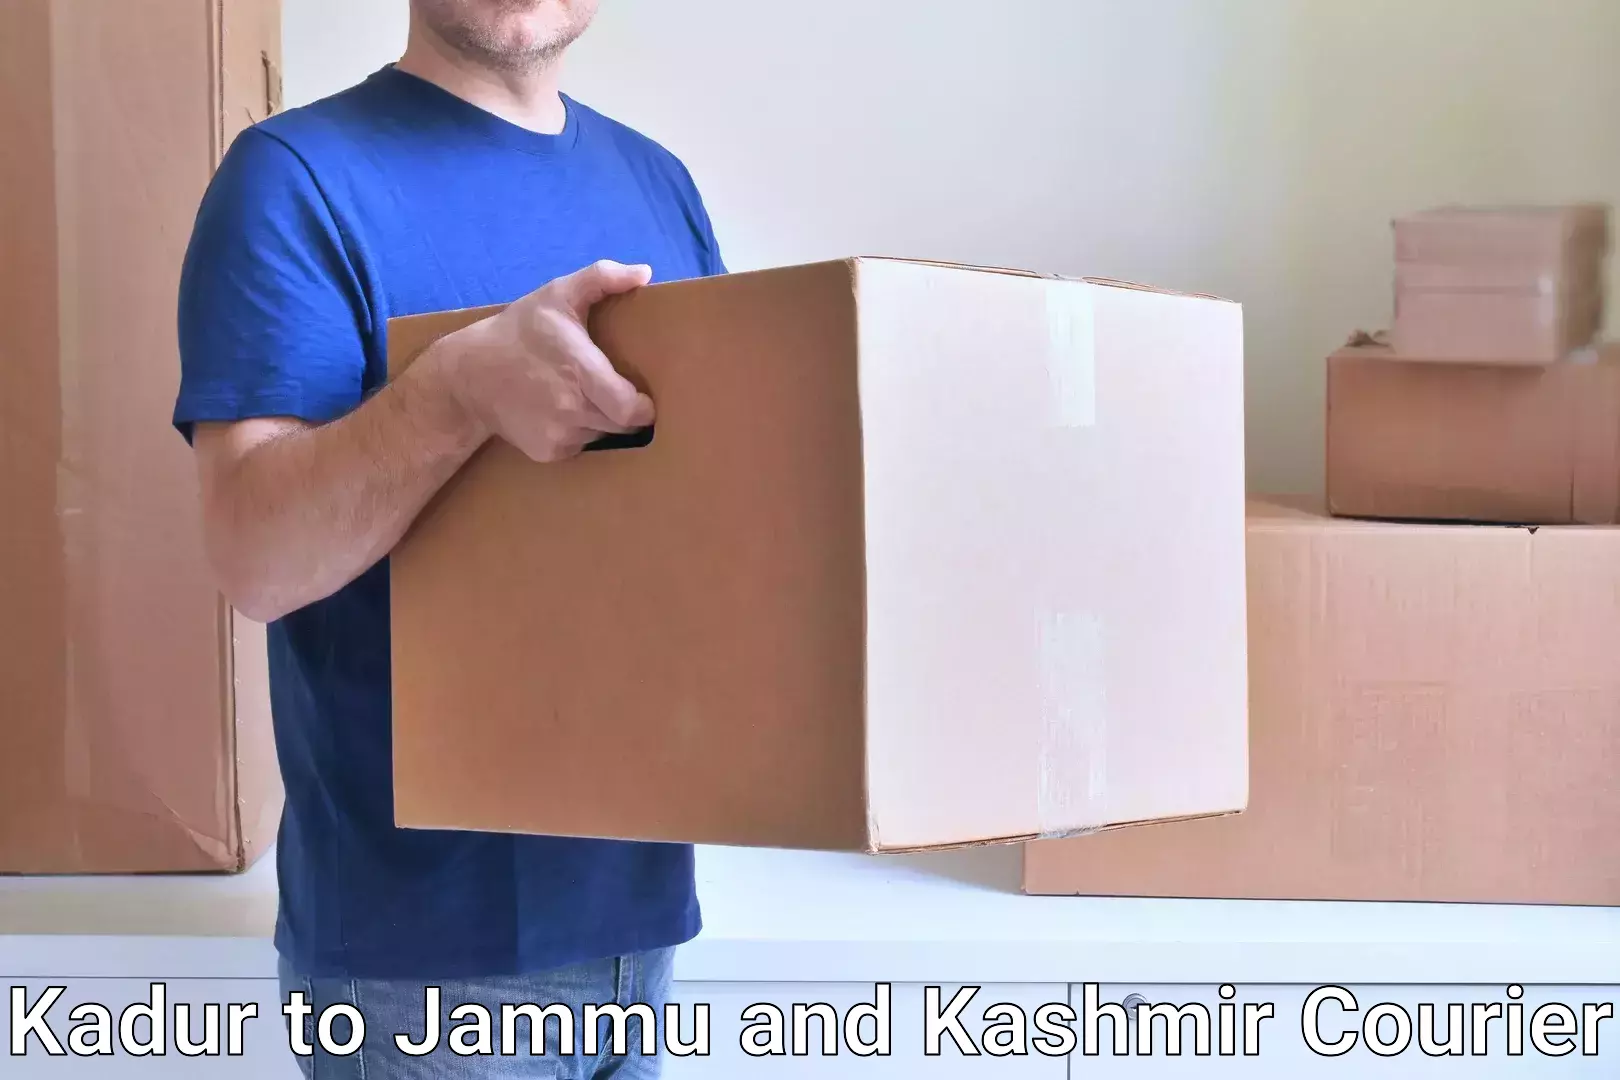 Courier service efficiency Kadur to Srinagar Kashmir